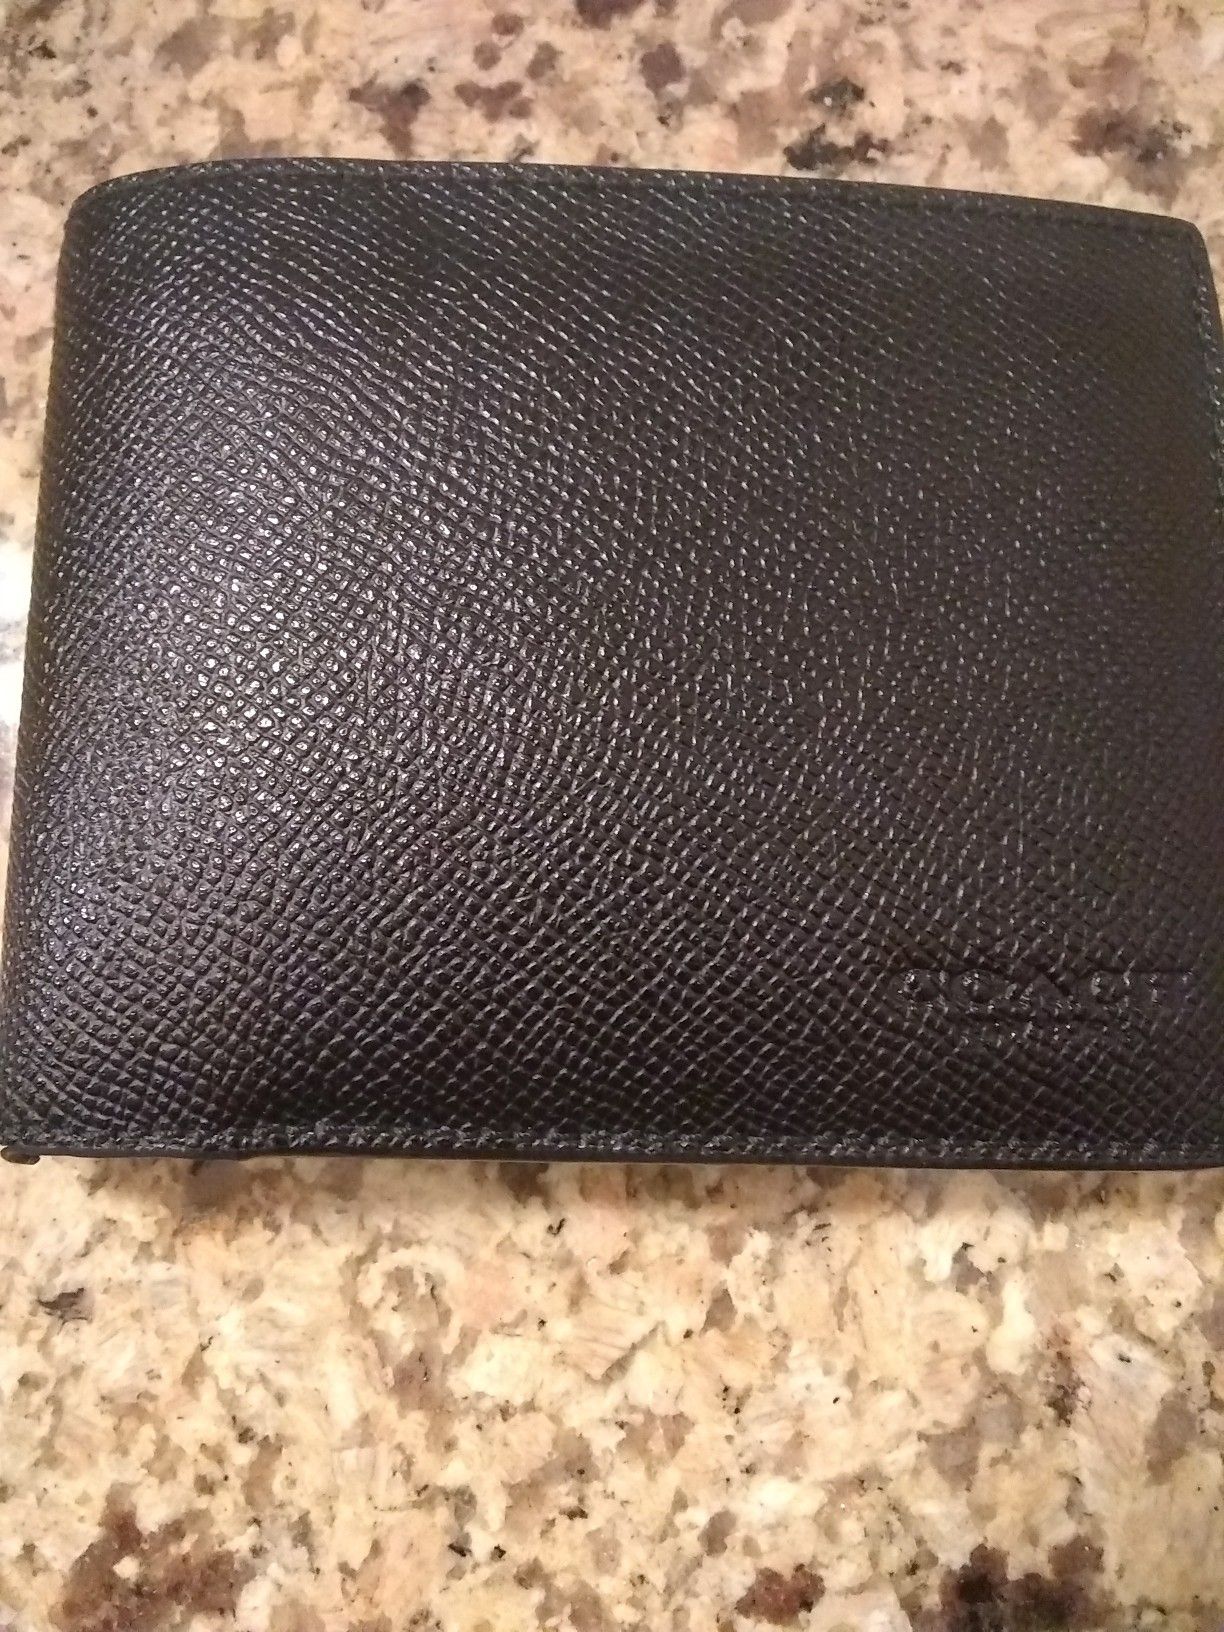 Brand new men's black leather coach wallet